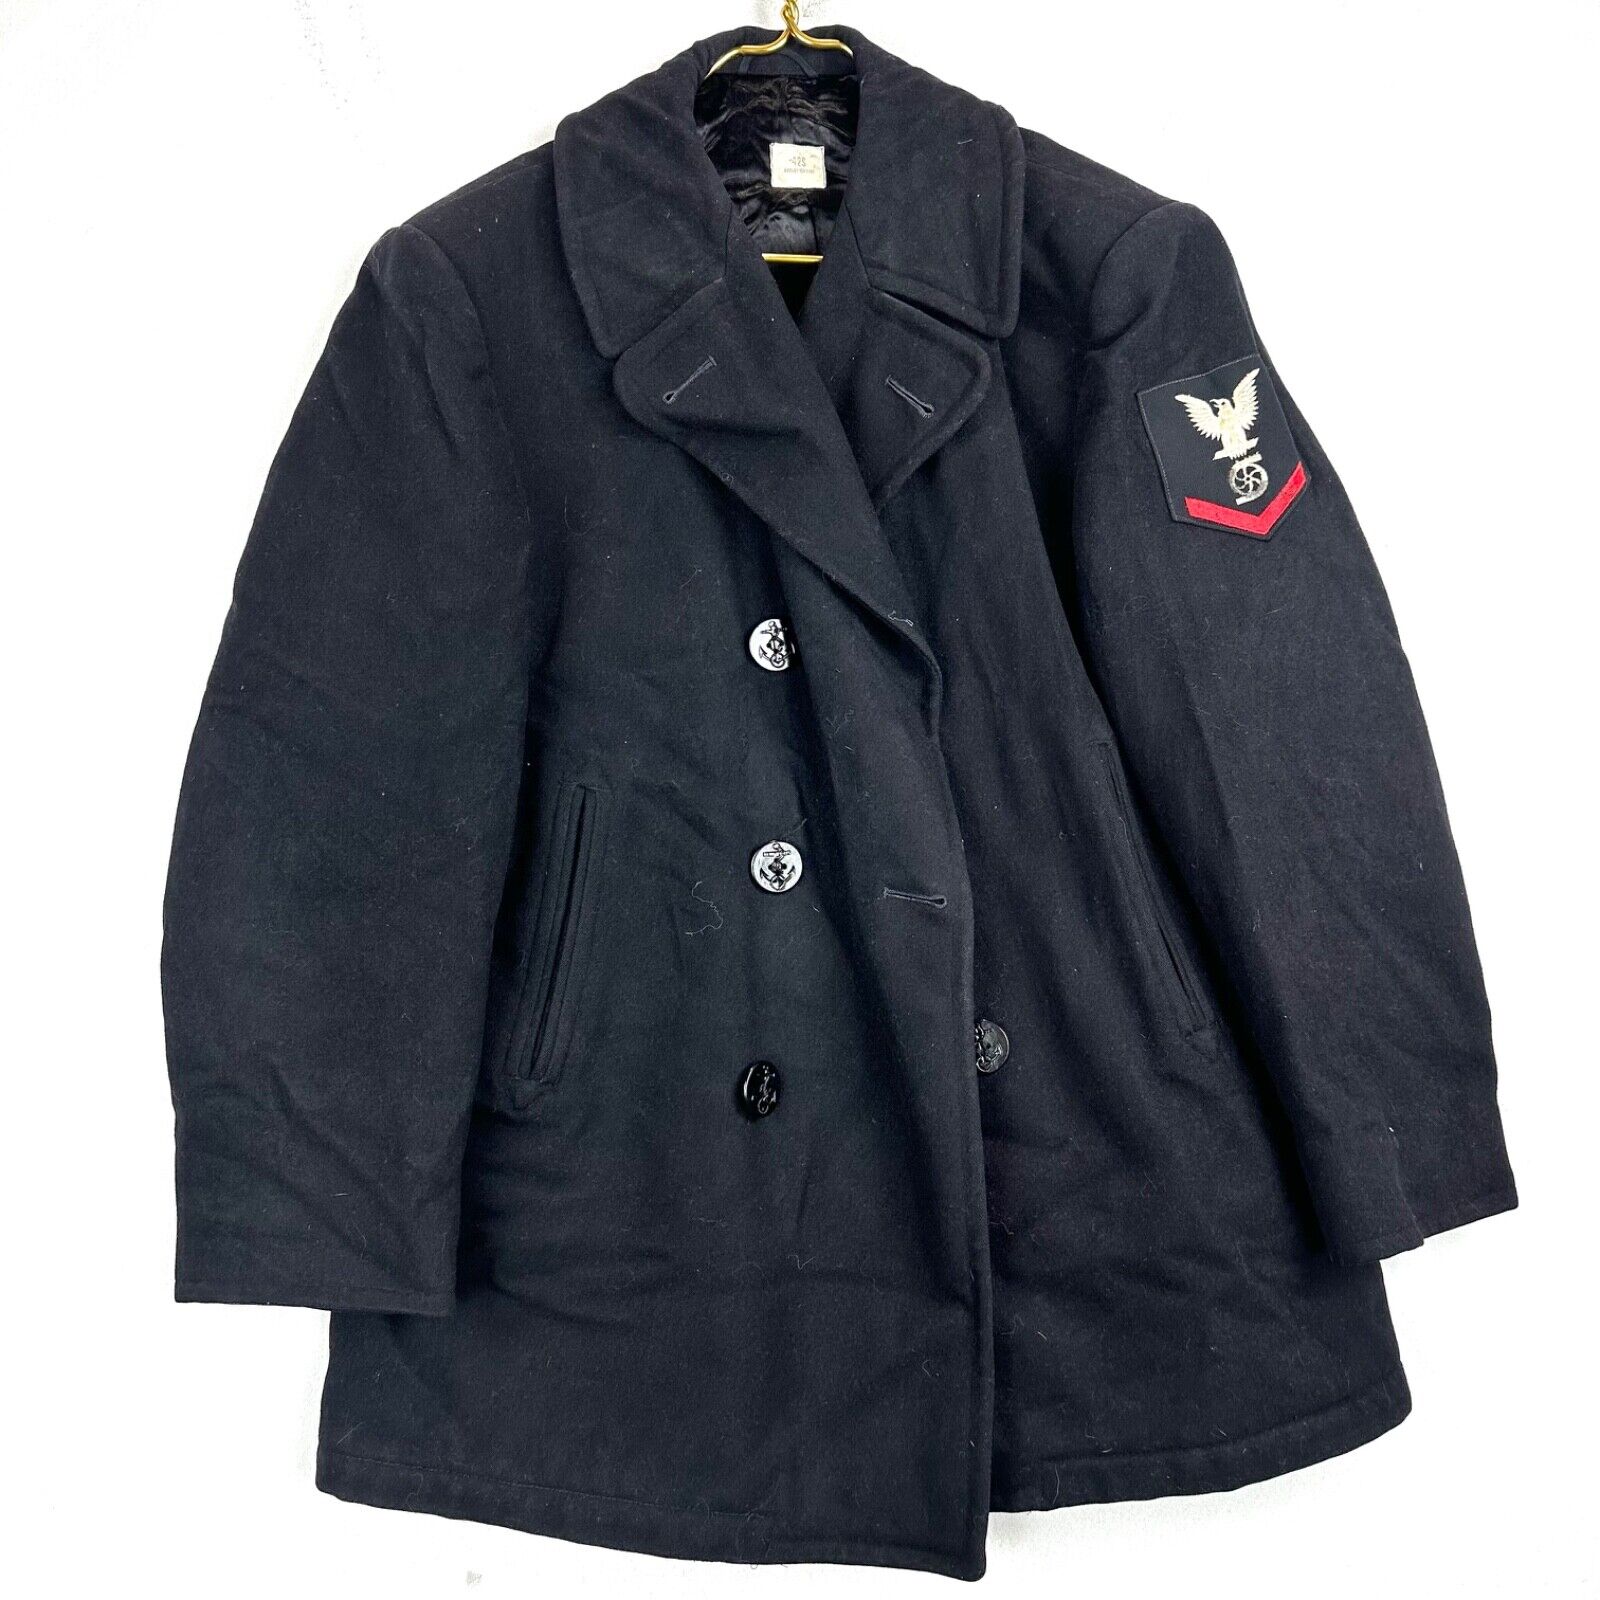 Vintage Us Military Wool Pea Coat Jacket Size 42 Black Insulated